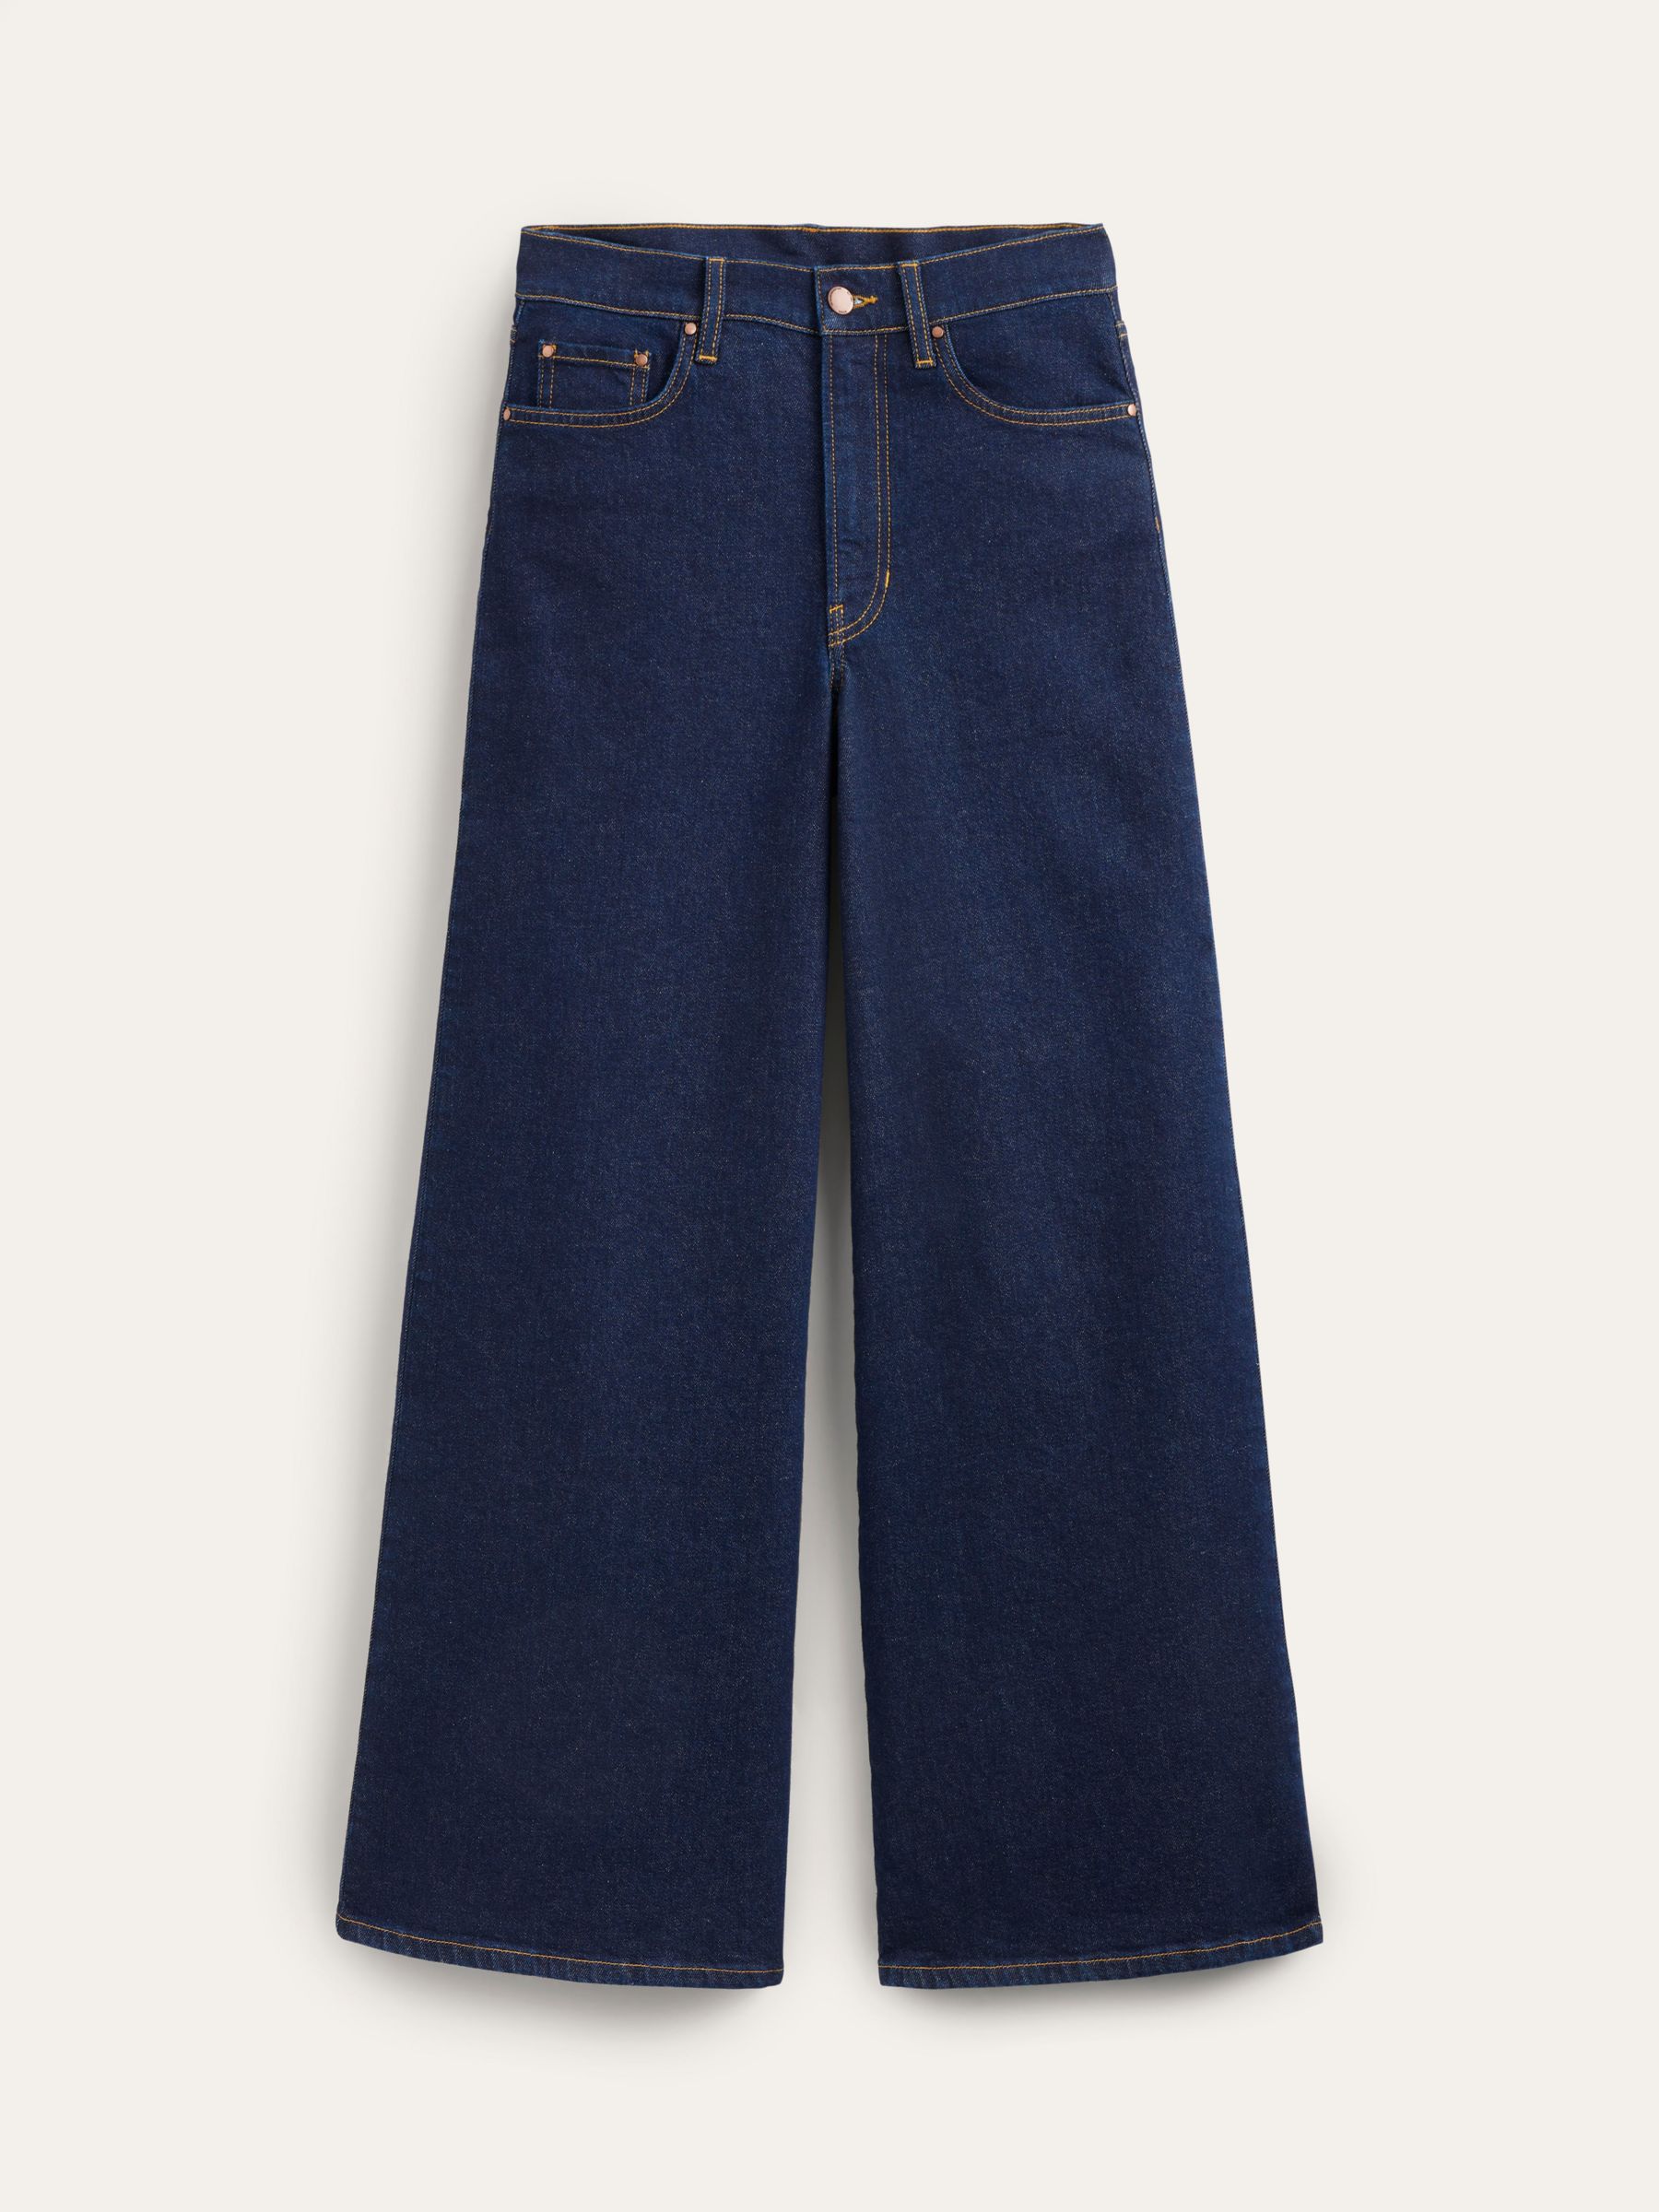 Boden High Rise Wide Leg Jeans, Indigo, W28/L32